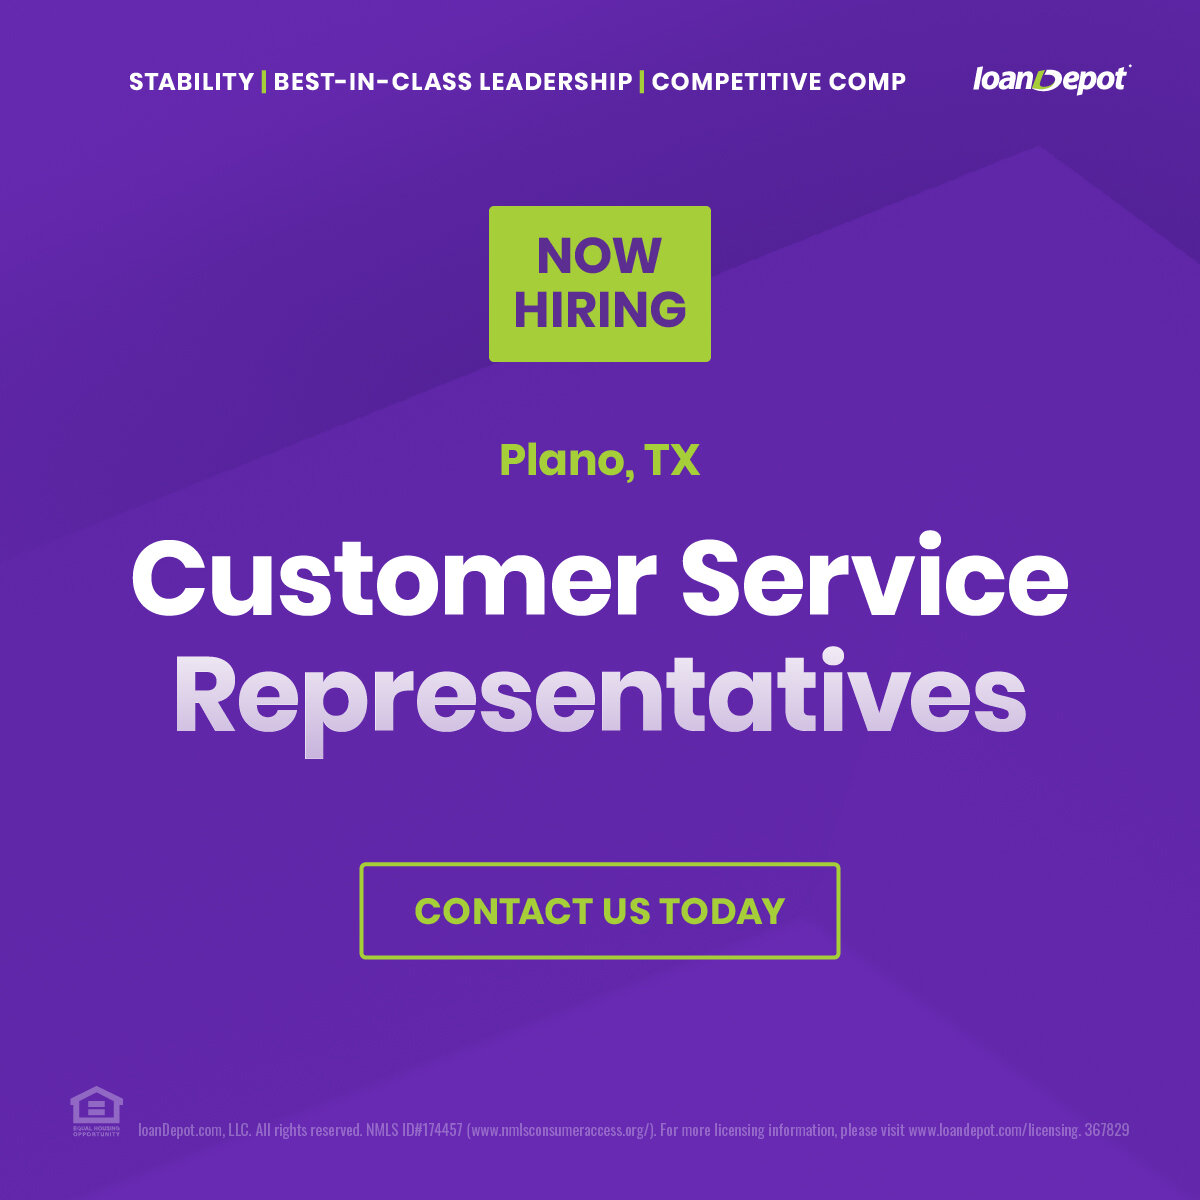 367829 - RECRUITING - Hiring - Customer Service Representatives - IG _2.jpg